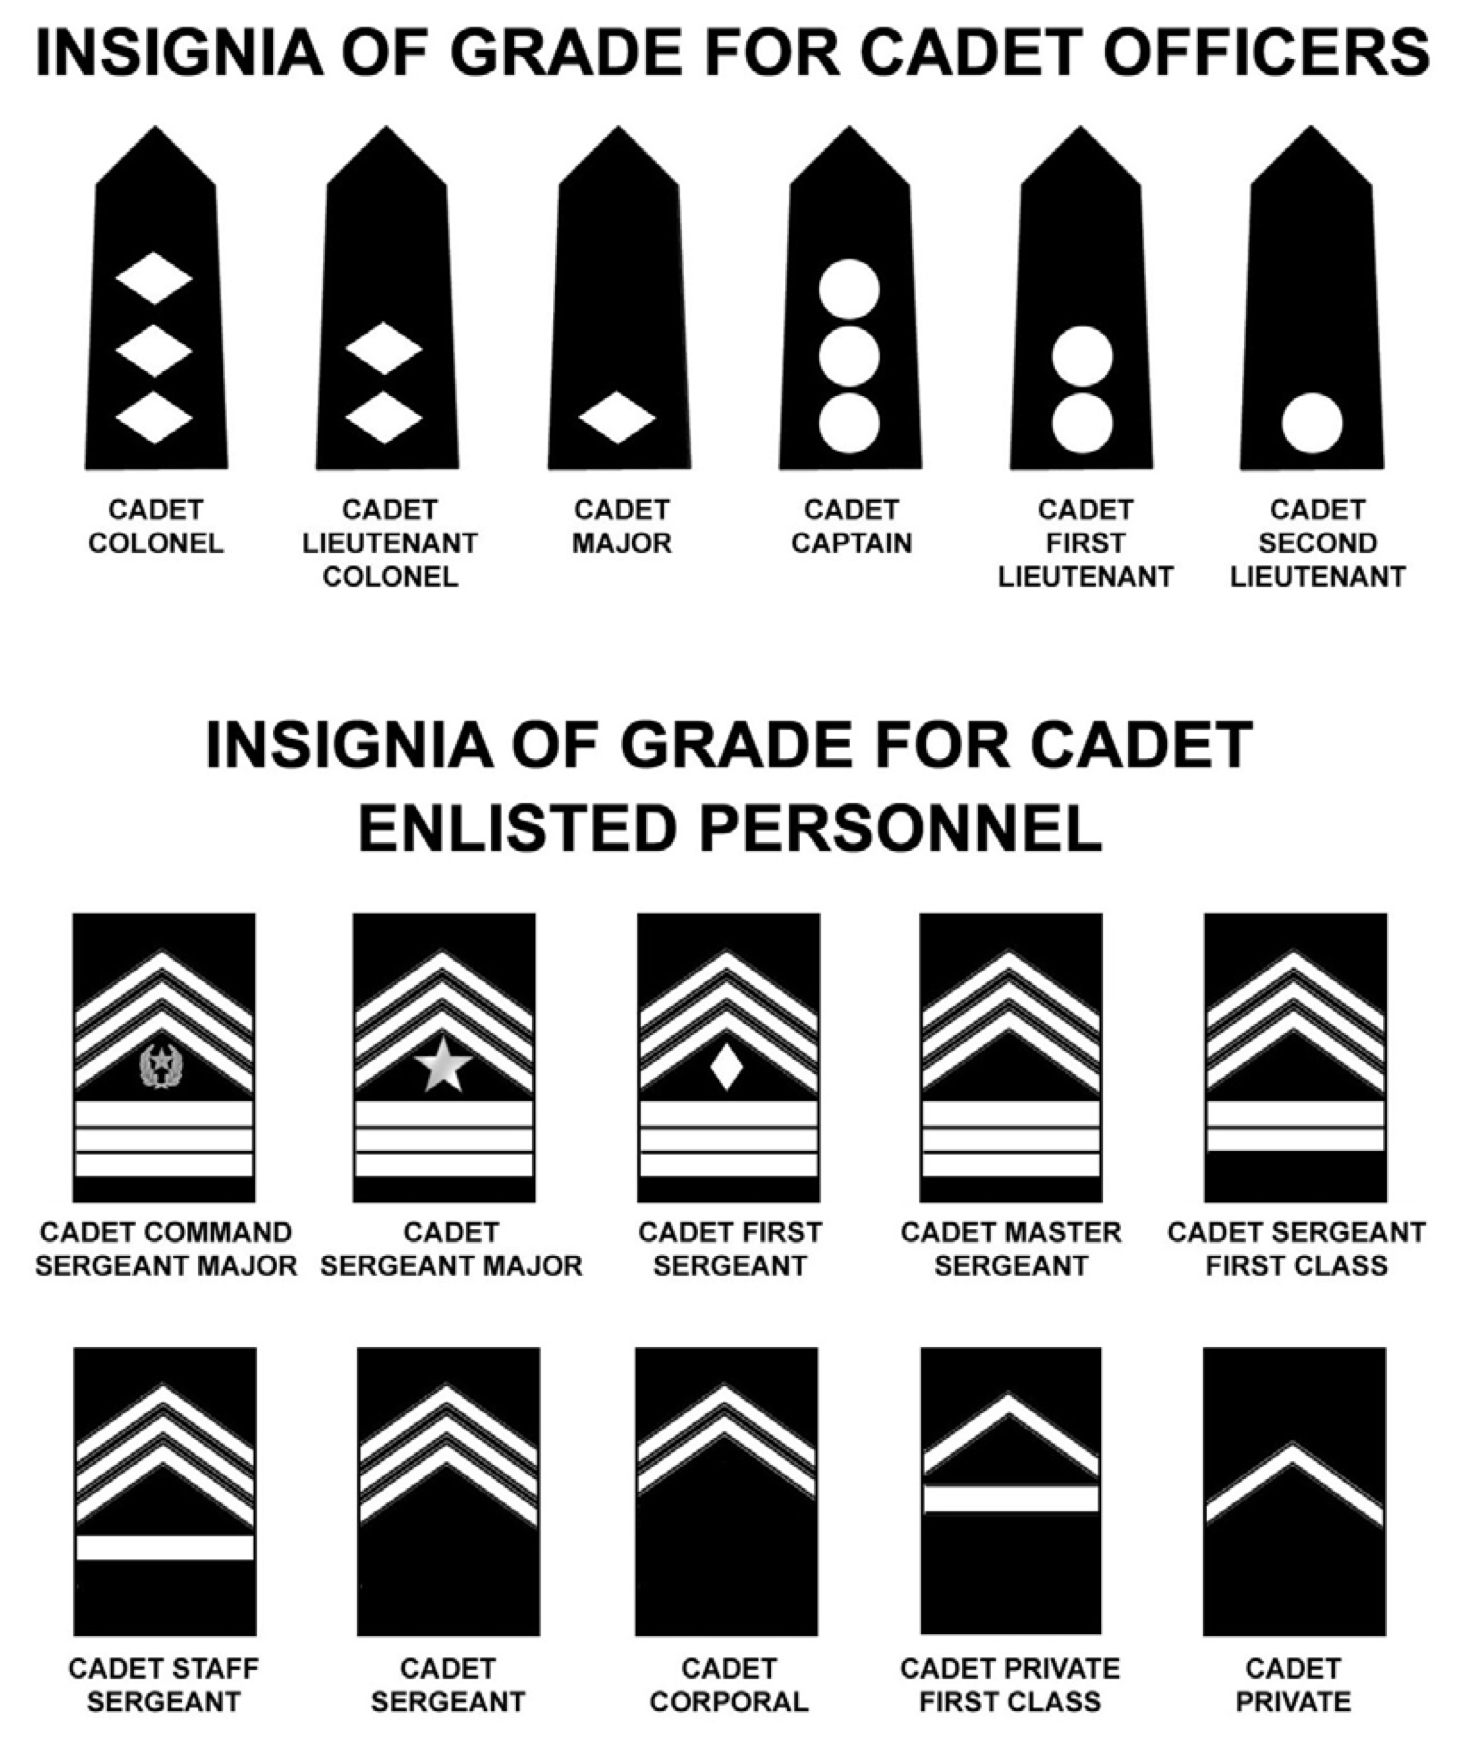 Cadet Ranks image